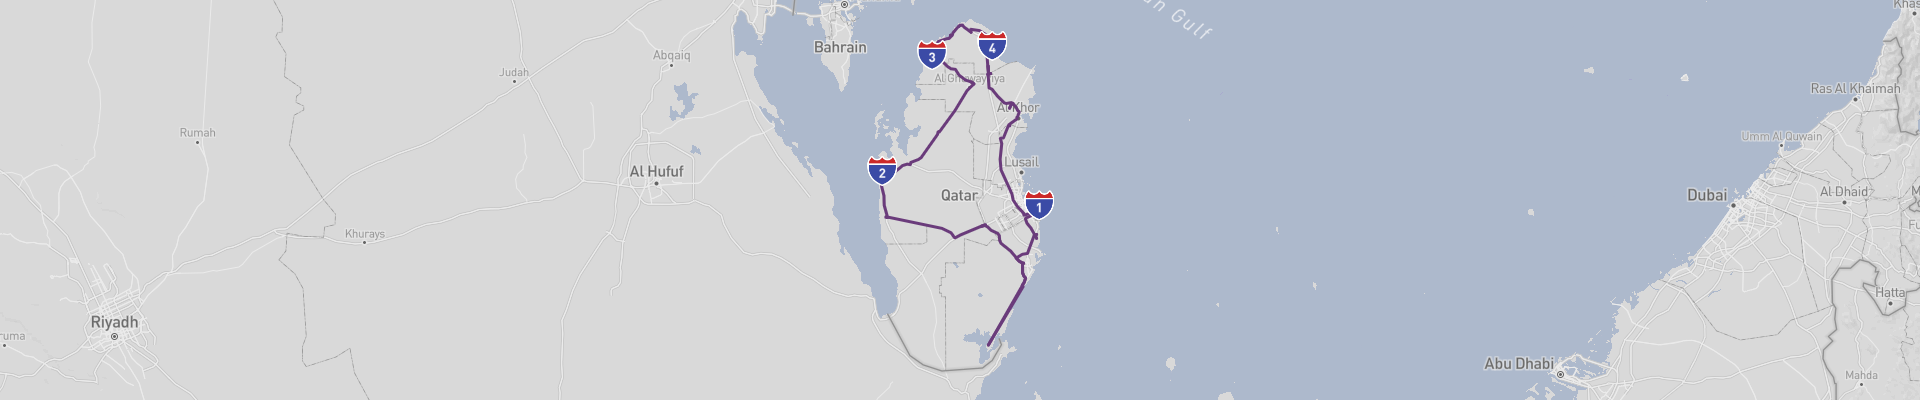 Qatar Road Trip